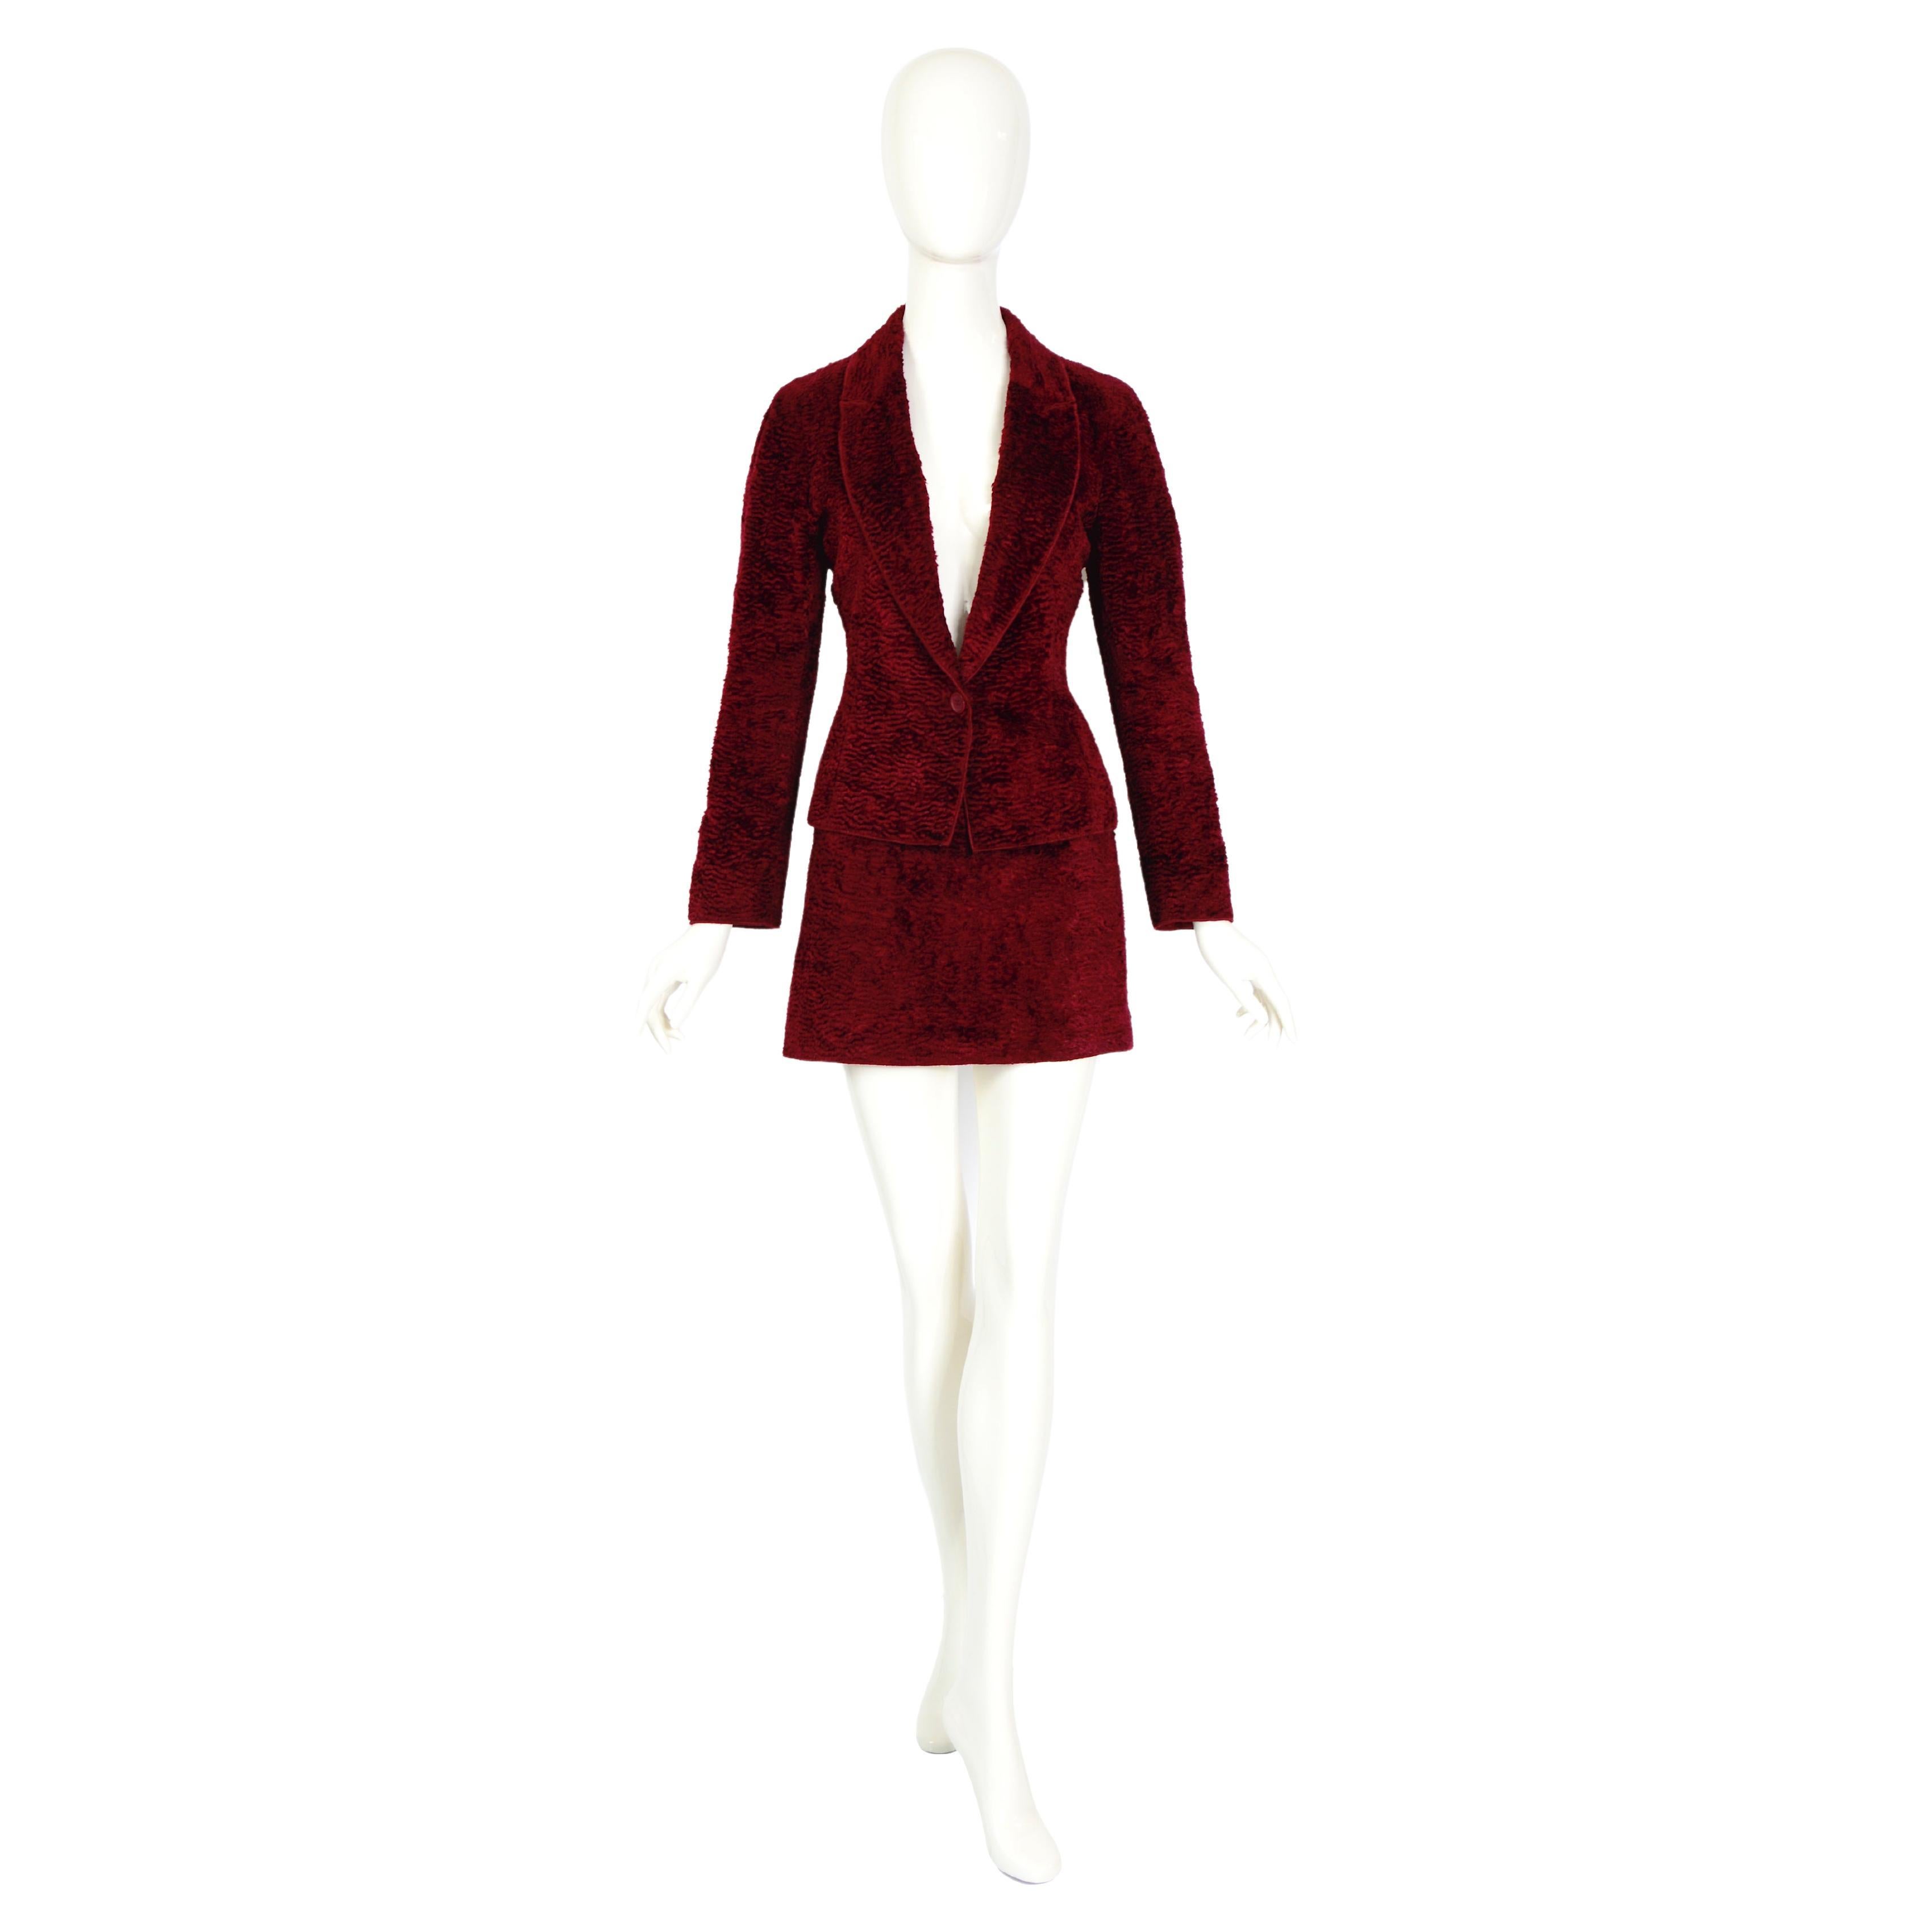 Ozbek by Rifat Ozbek vintage 90s burgundy cotton faux fur astrakhan suit For Sale